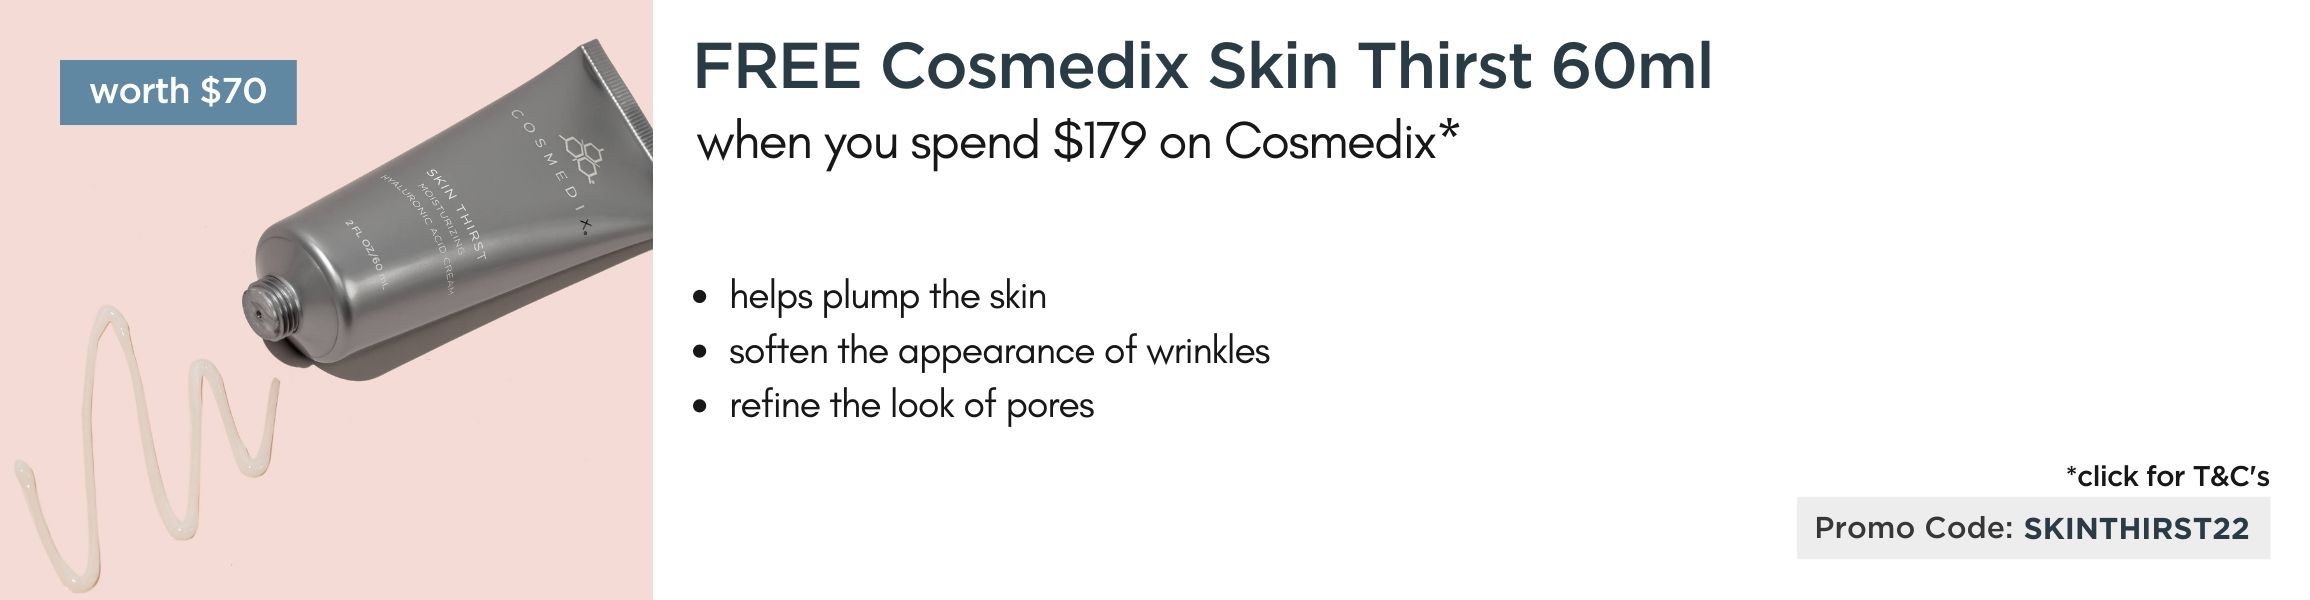 FREE Cosmedix Skin Thirst 60ml worth $70 when you spend $179 on Cosmedix